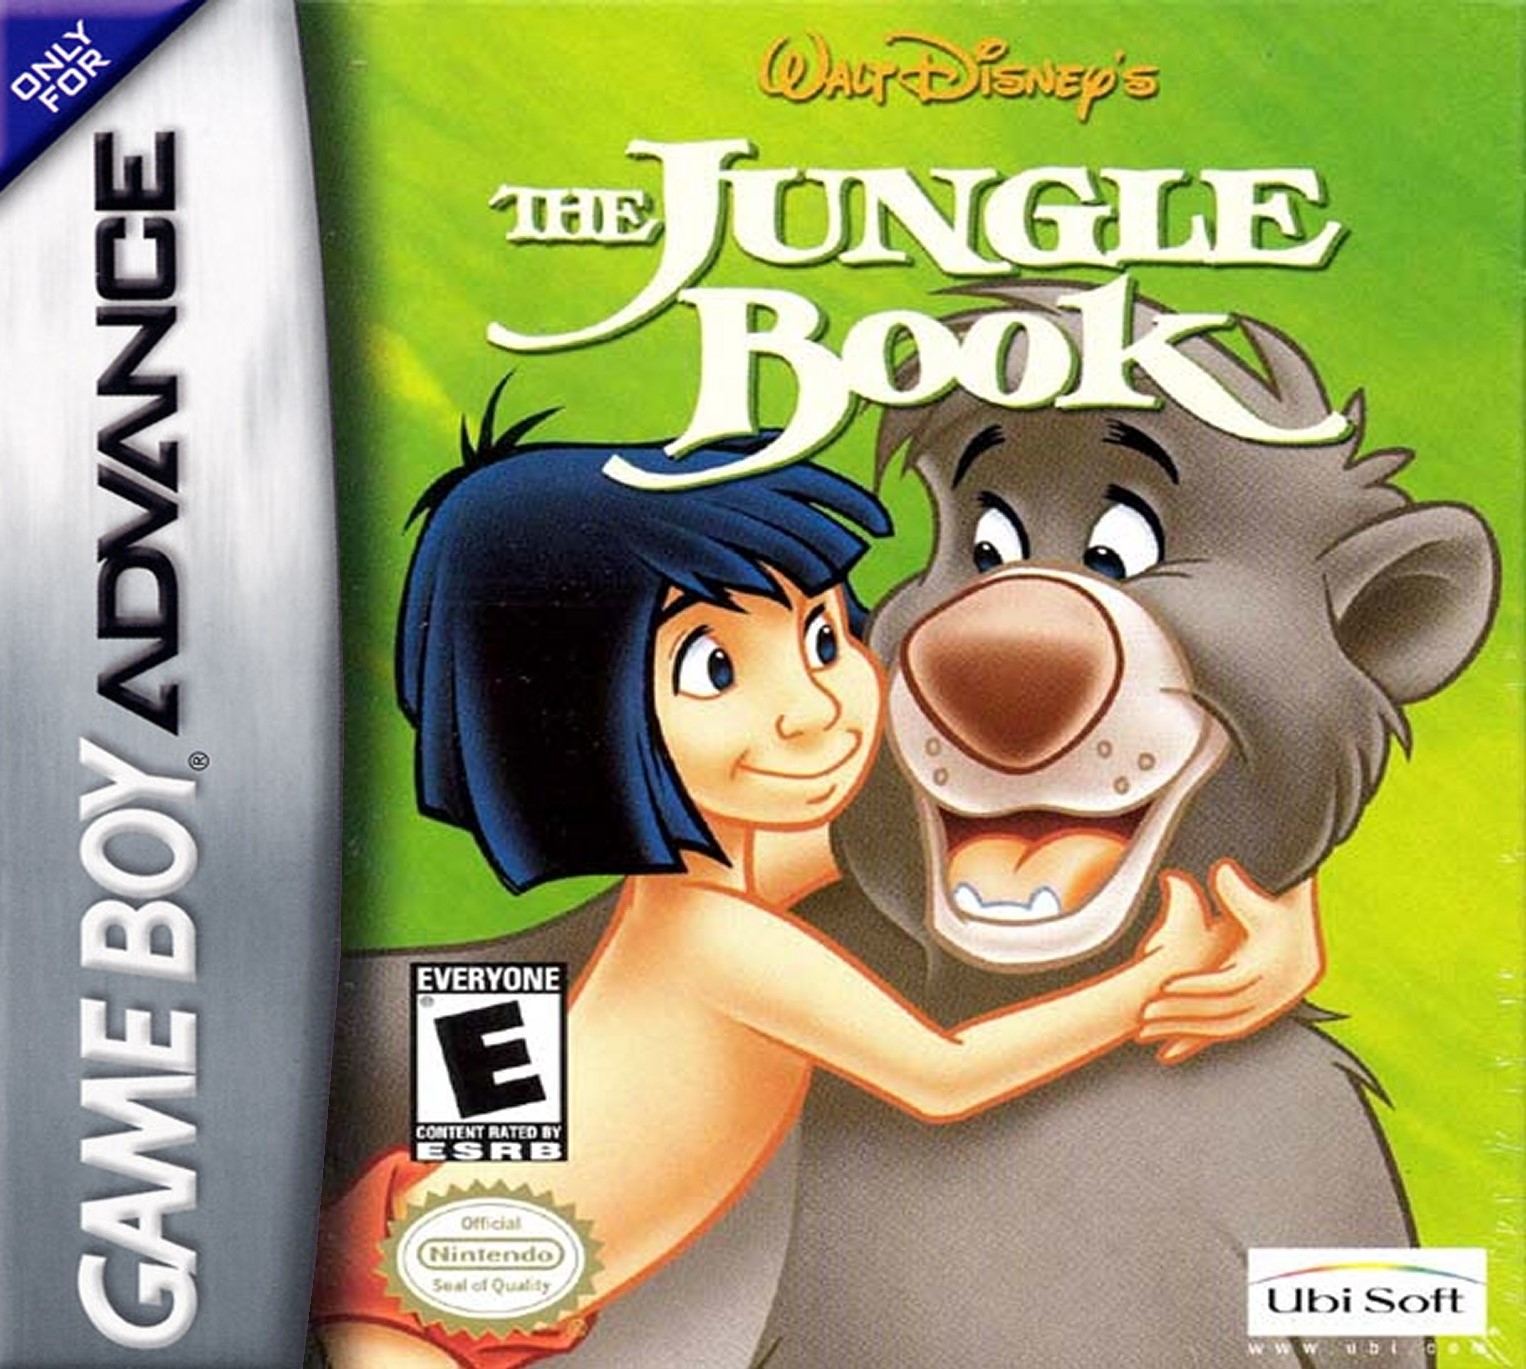 'The Jungle Book'